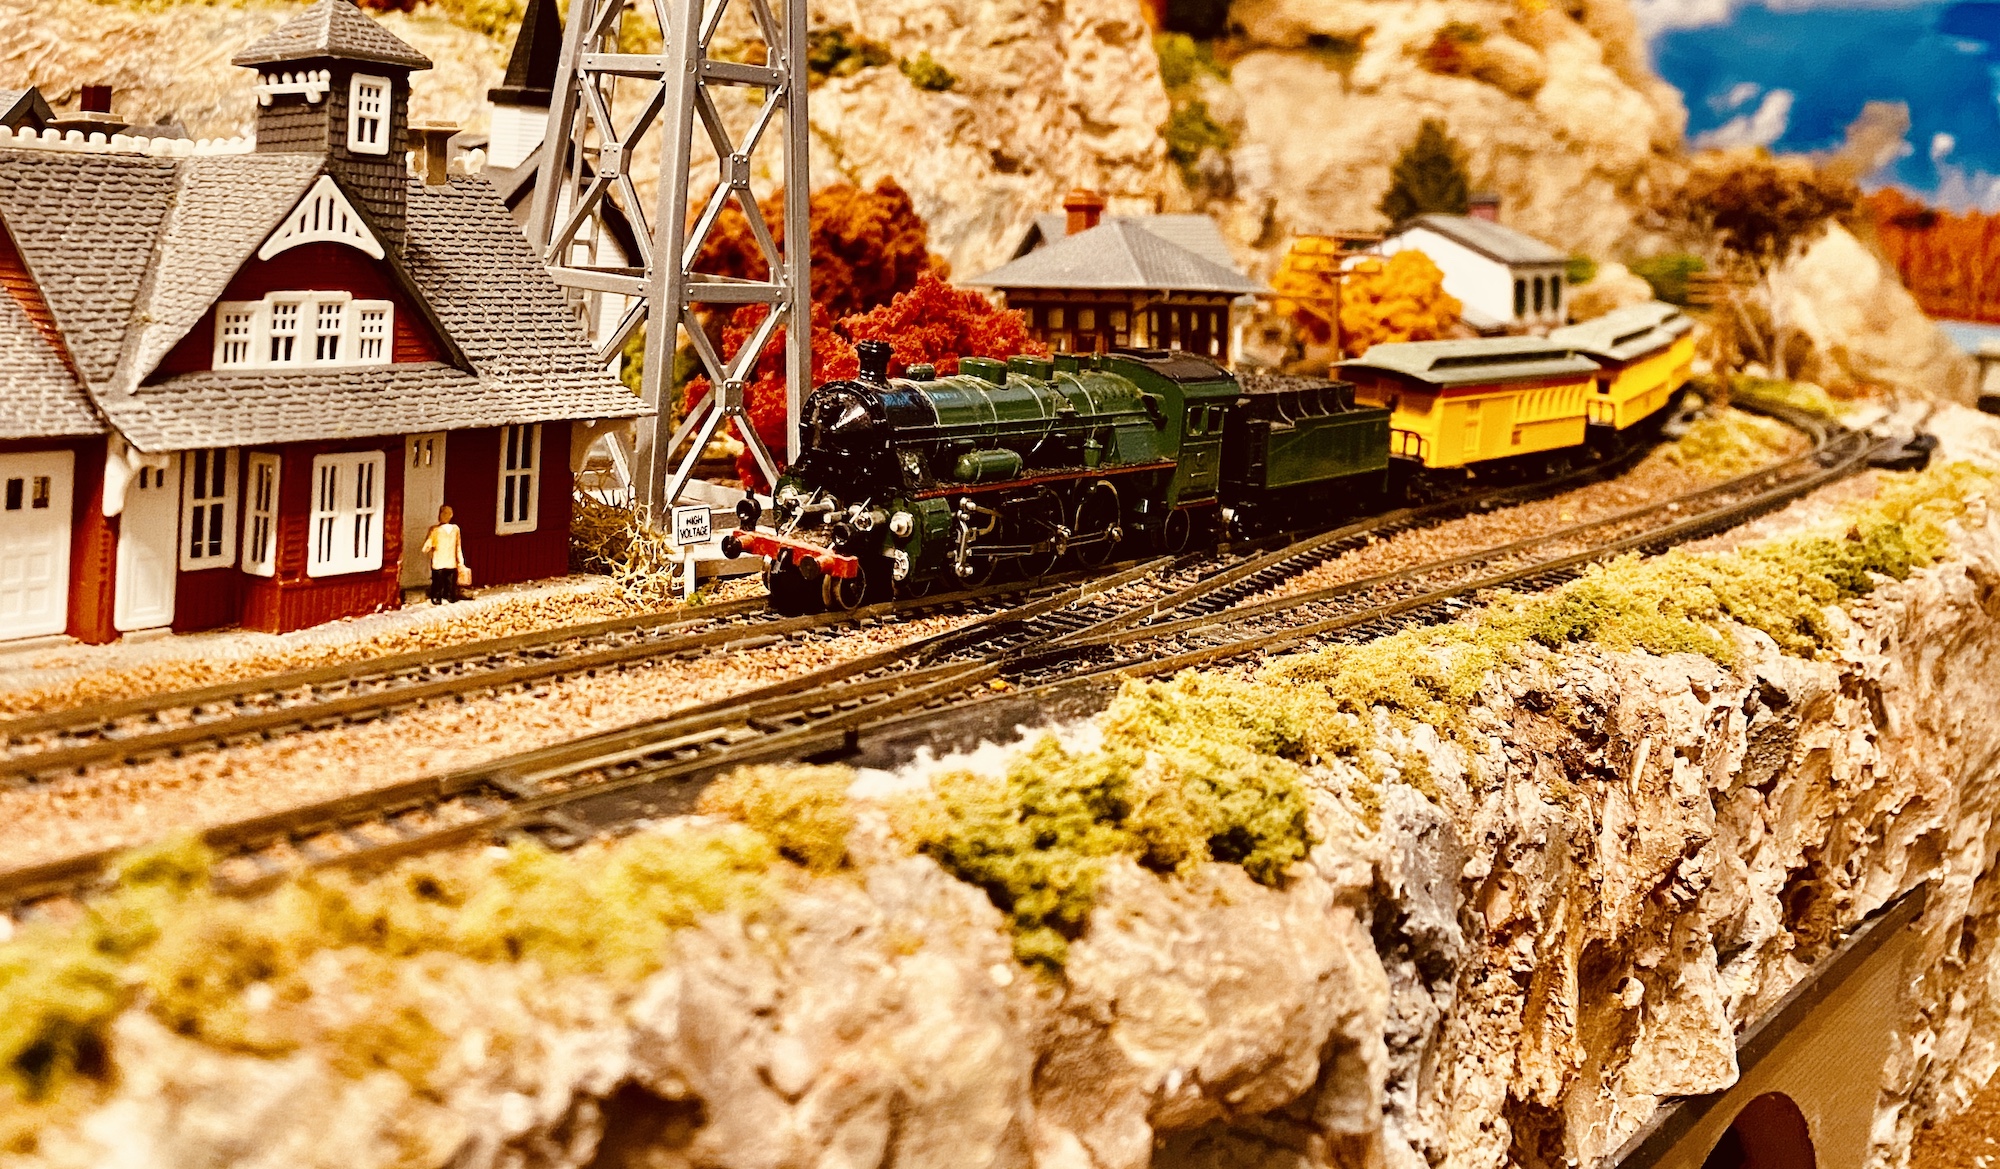 HO Model Railroads